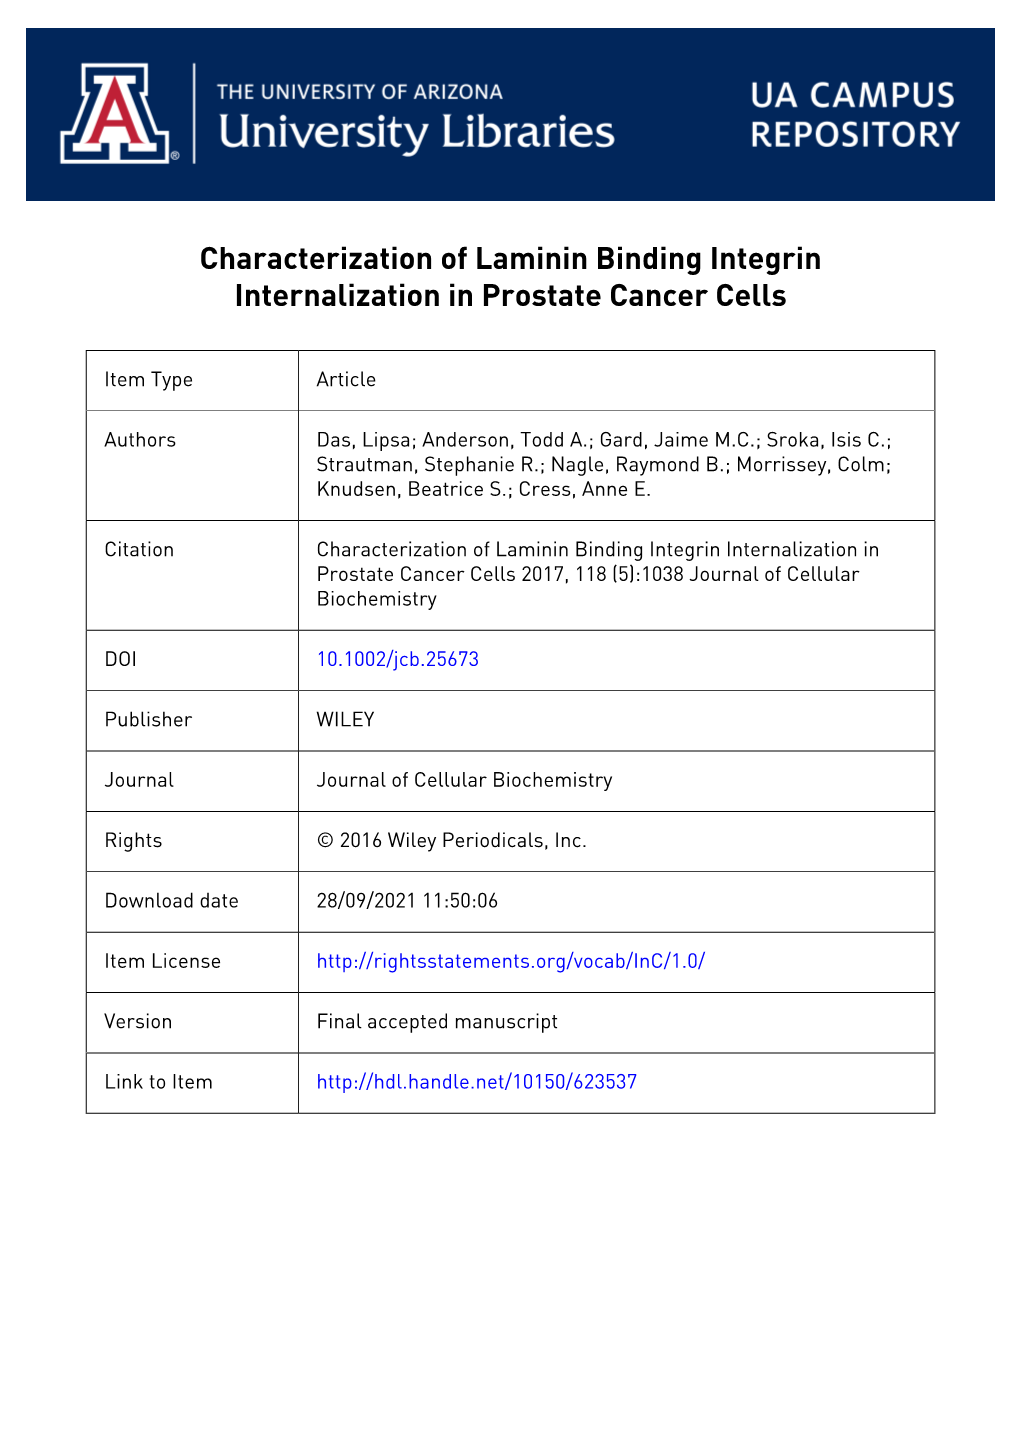 Characterization of Laminin Binding Integrin Internalization in Prostate Cancer Cells